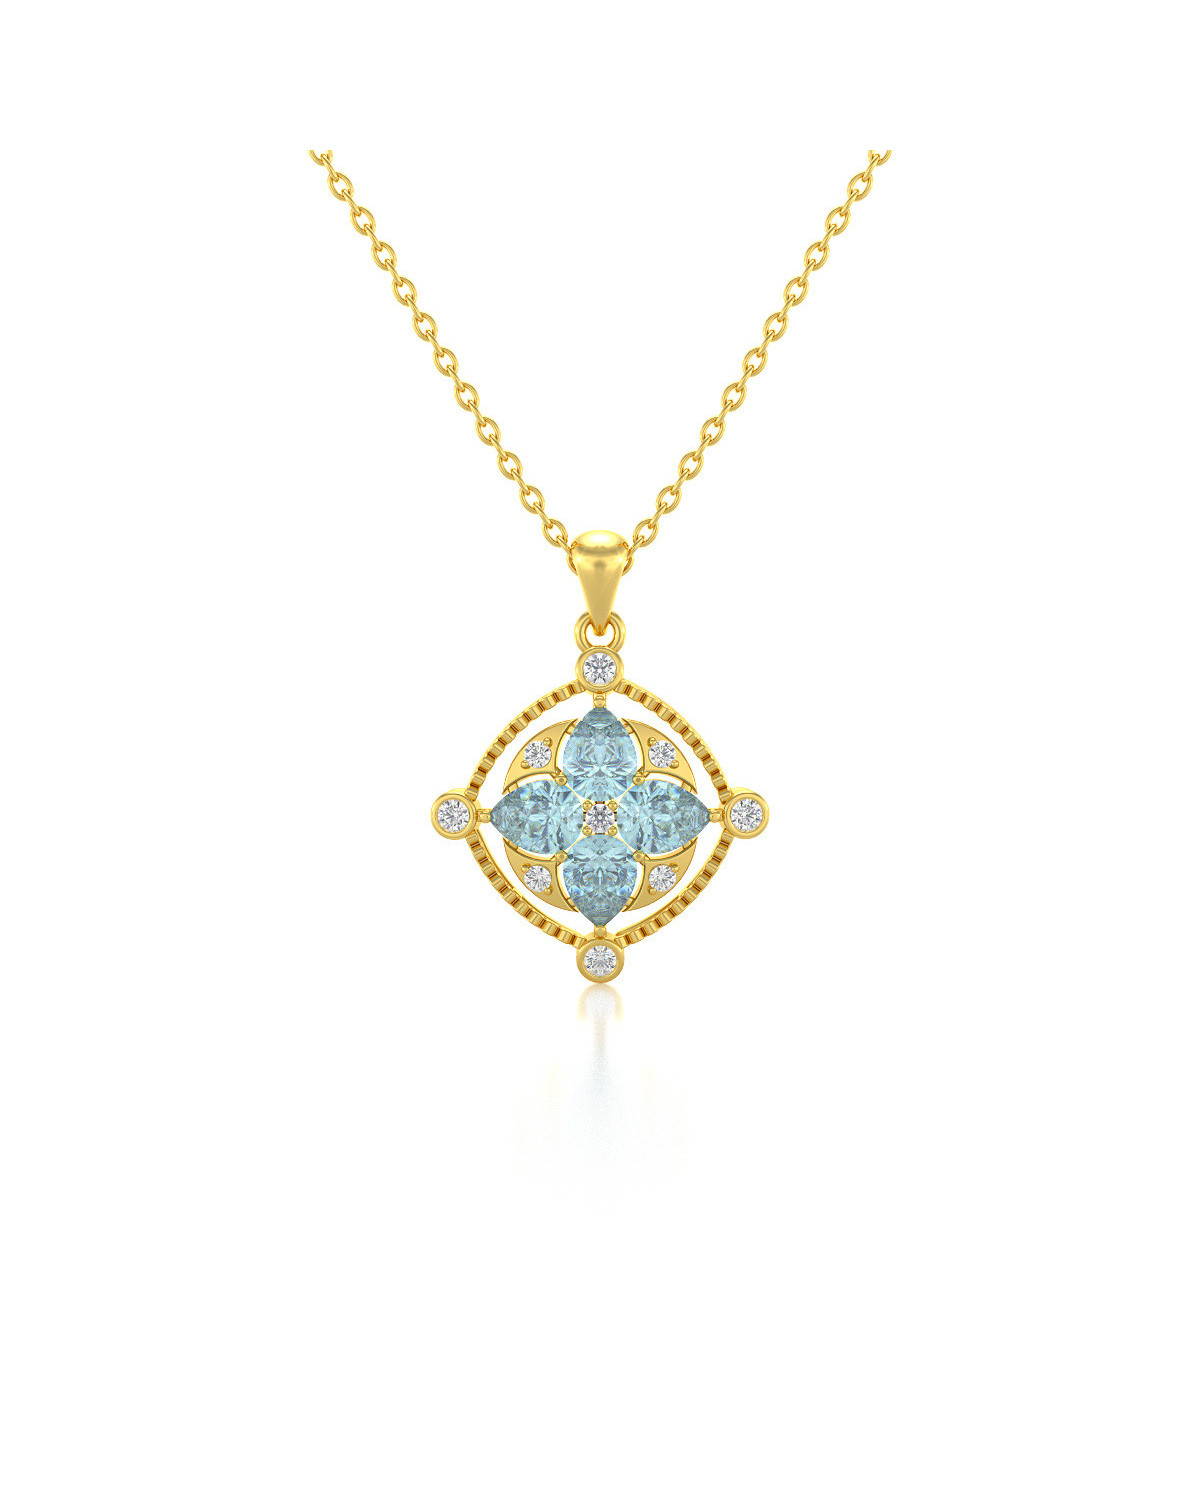 14K Gold Aquamarine Diamonds Necklace Pendant Gold Chain included